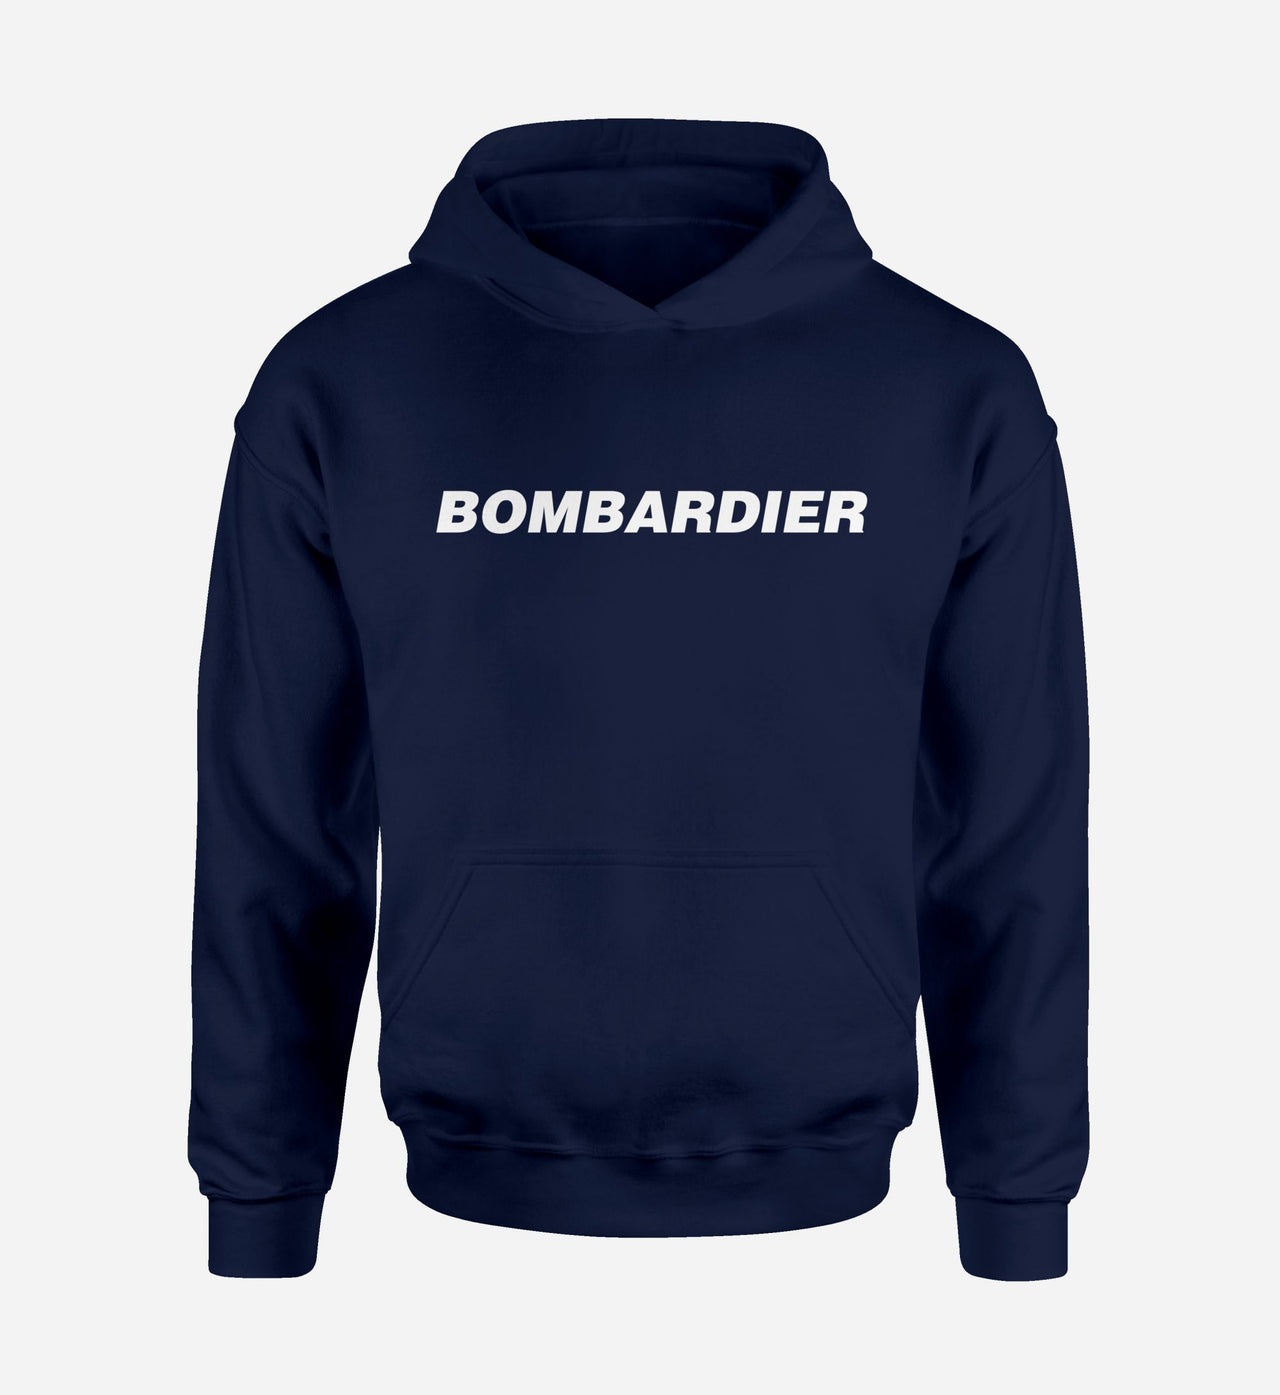 Bombardier & Text Designed Hoodies